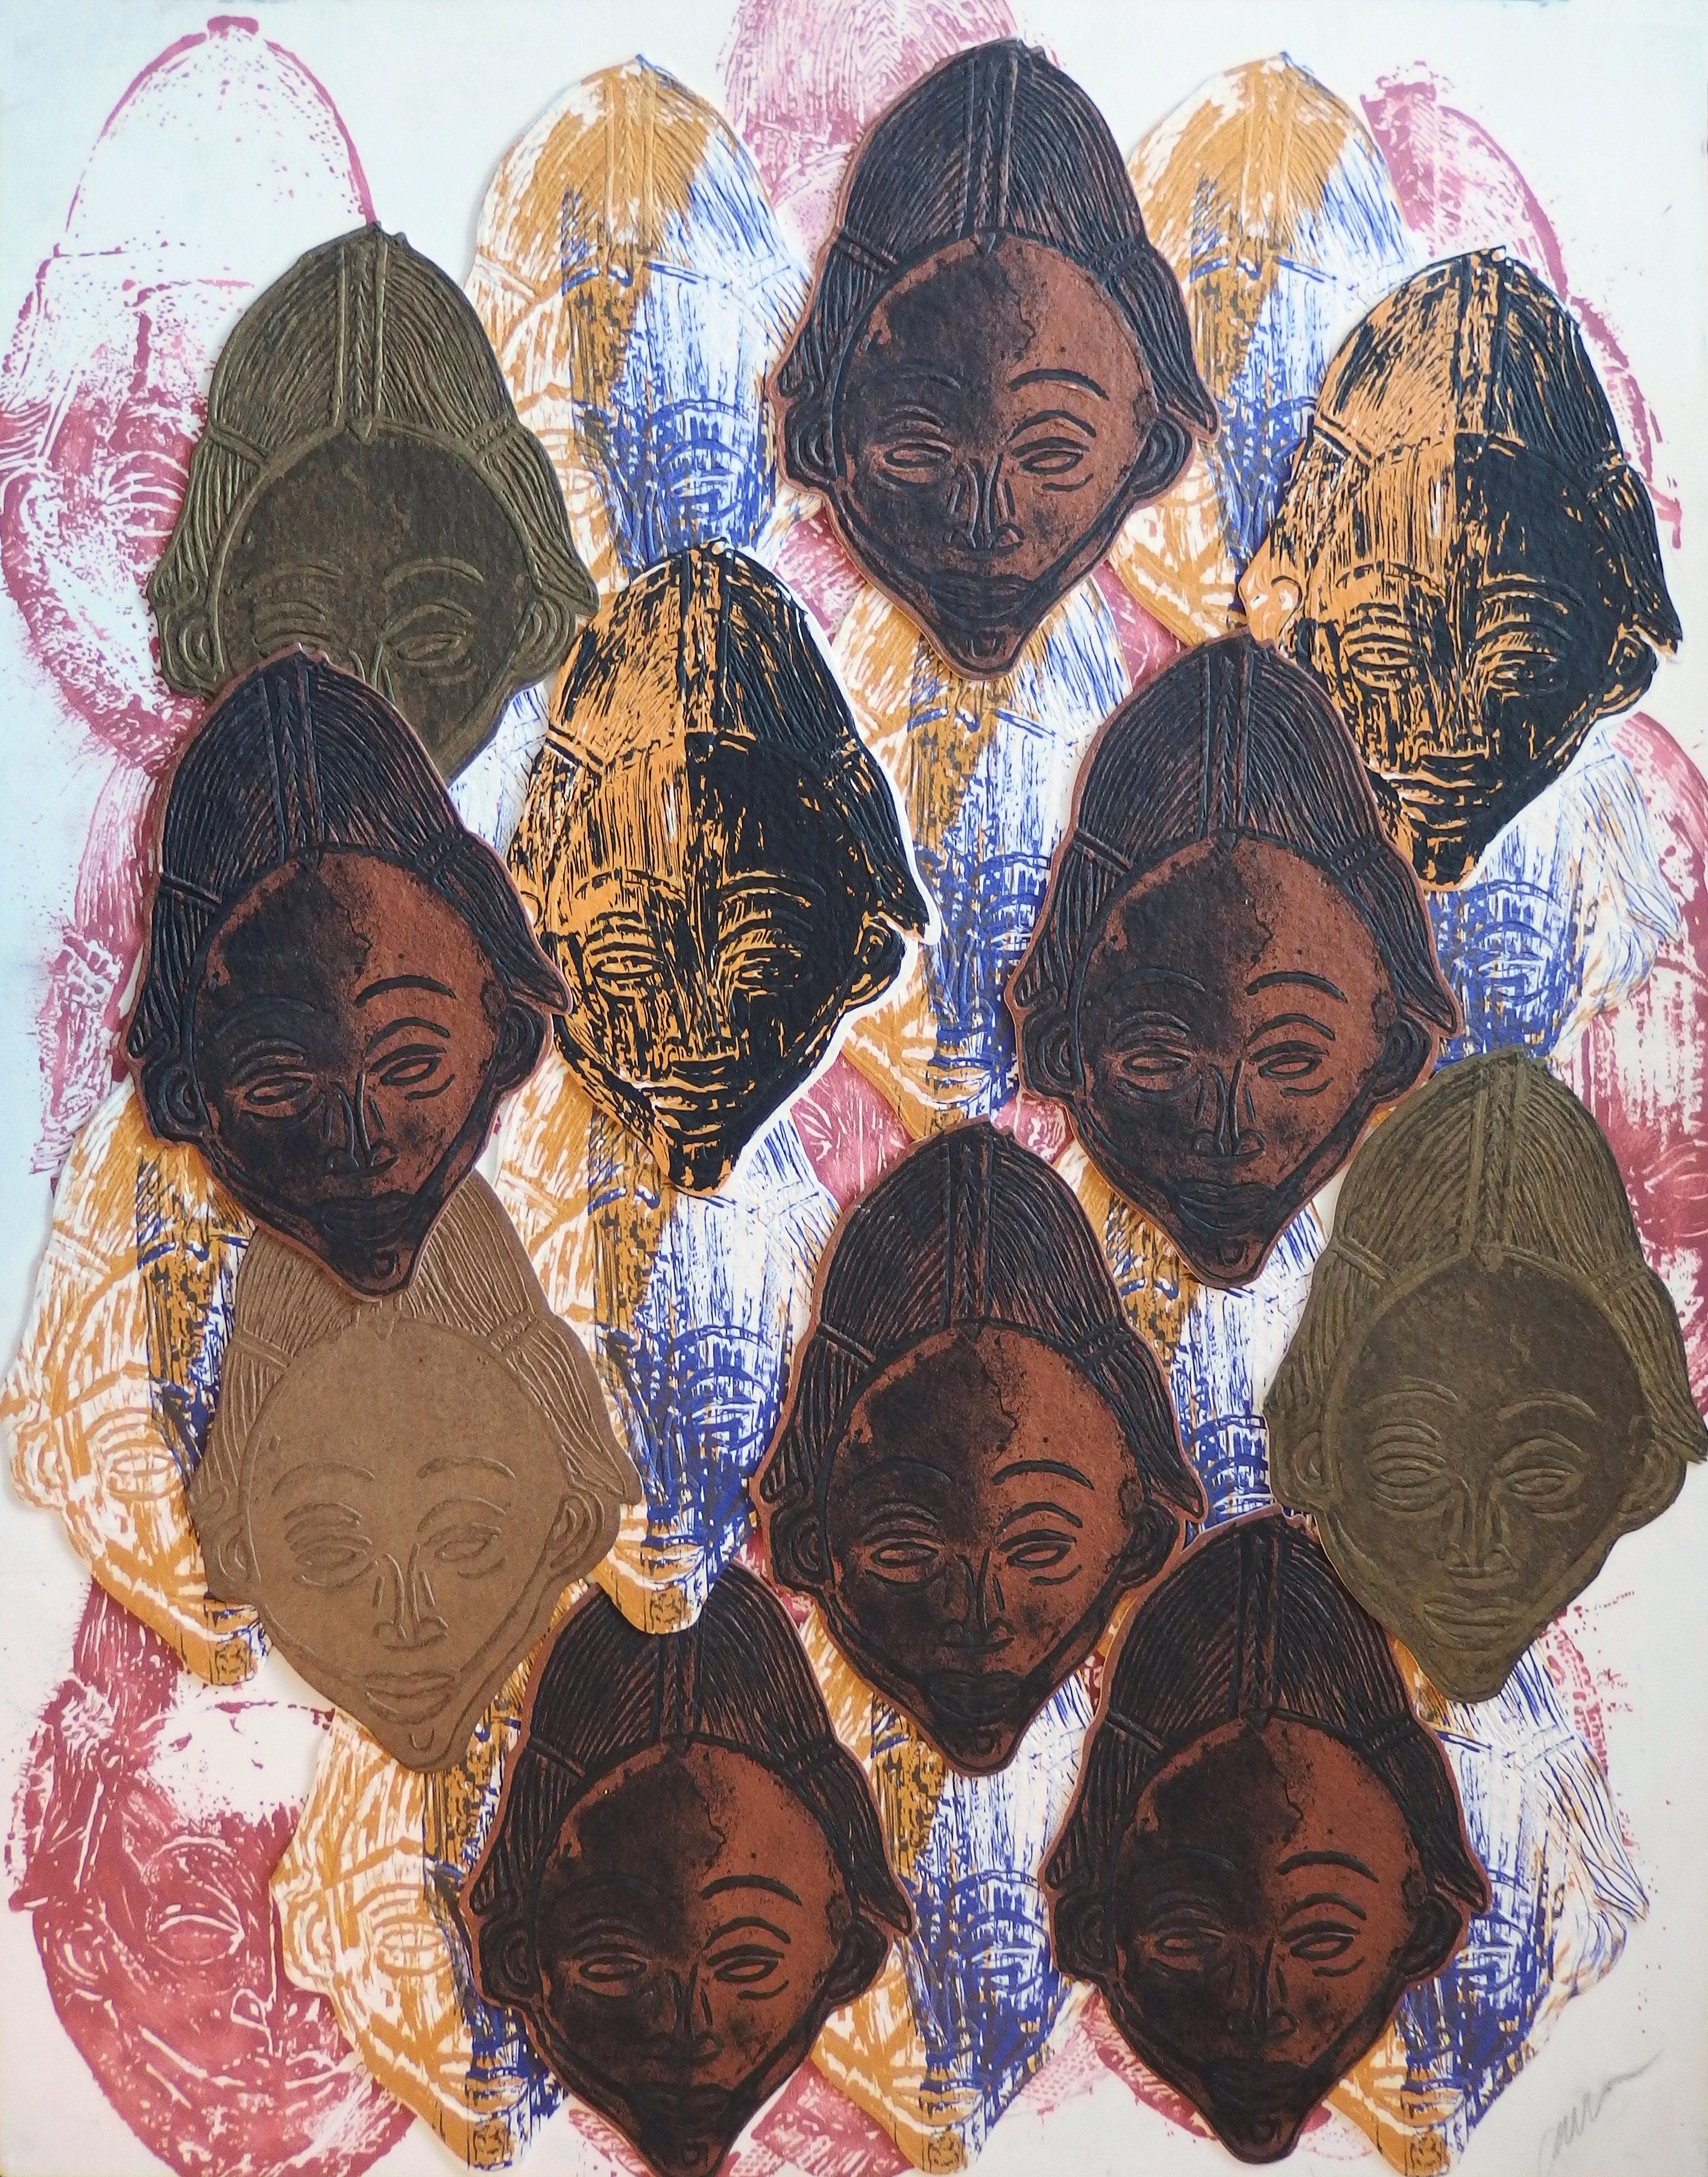 Accumulation de masques africains - Collage original signé à la main - Mixed Media Art de Arman